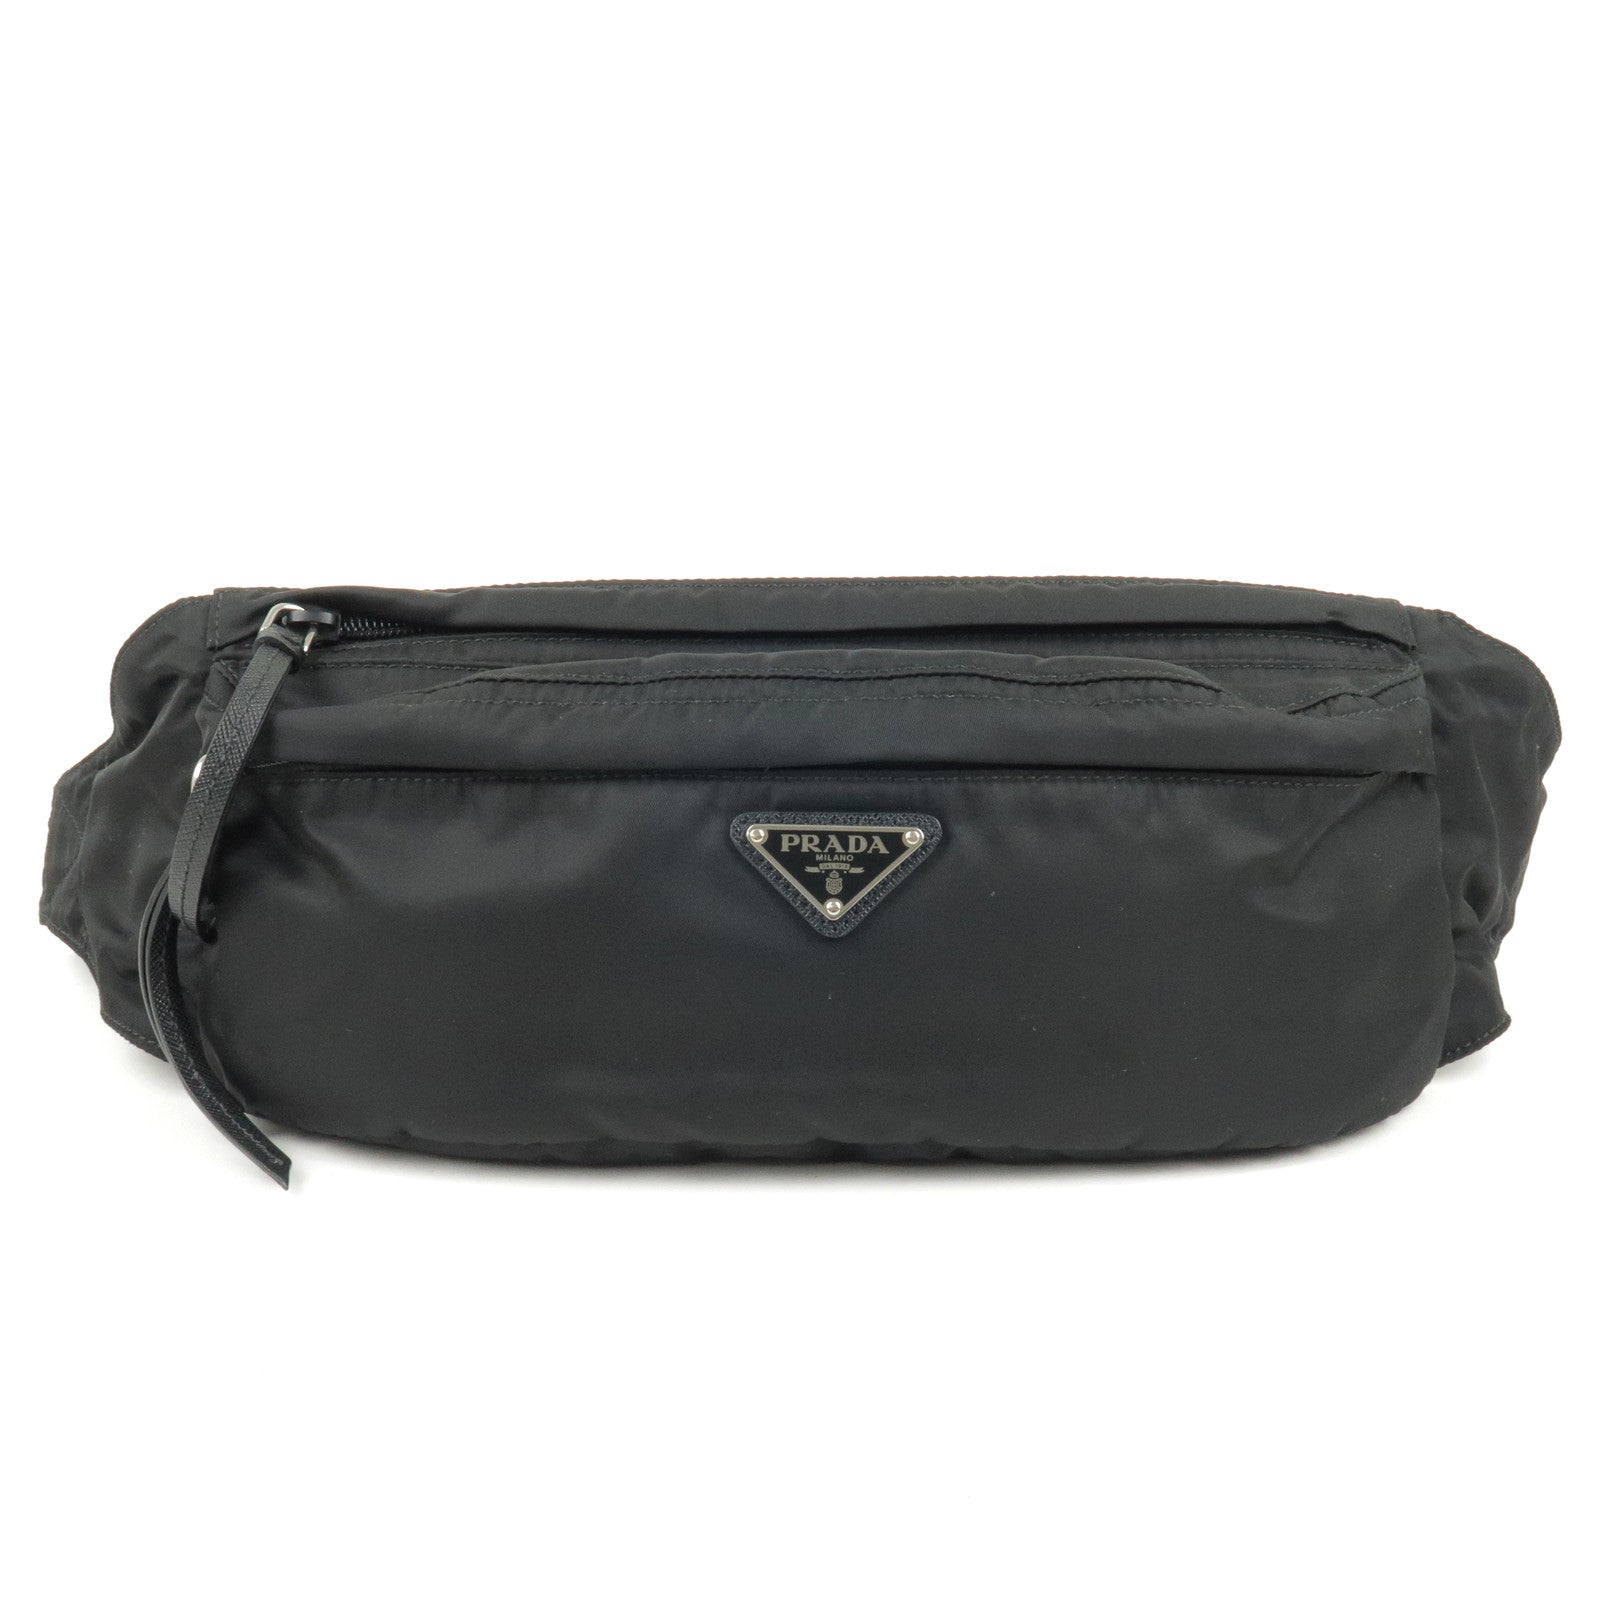 PRADA-Logo-Nylon-Leather-Waist-Pouch-Body-Bag-NERO-Black